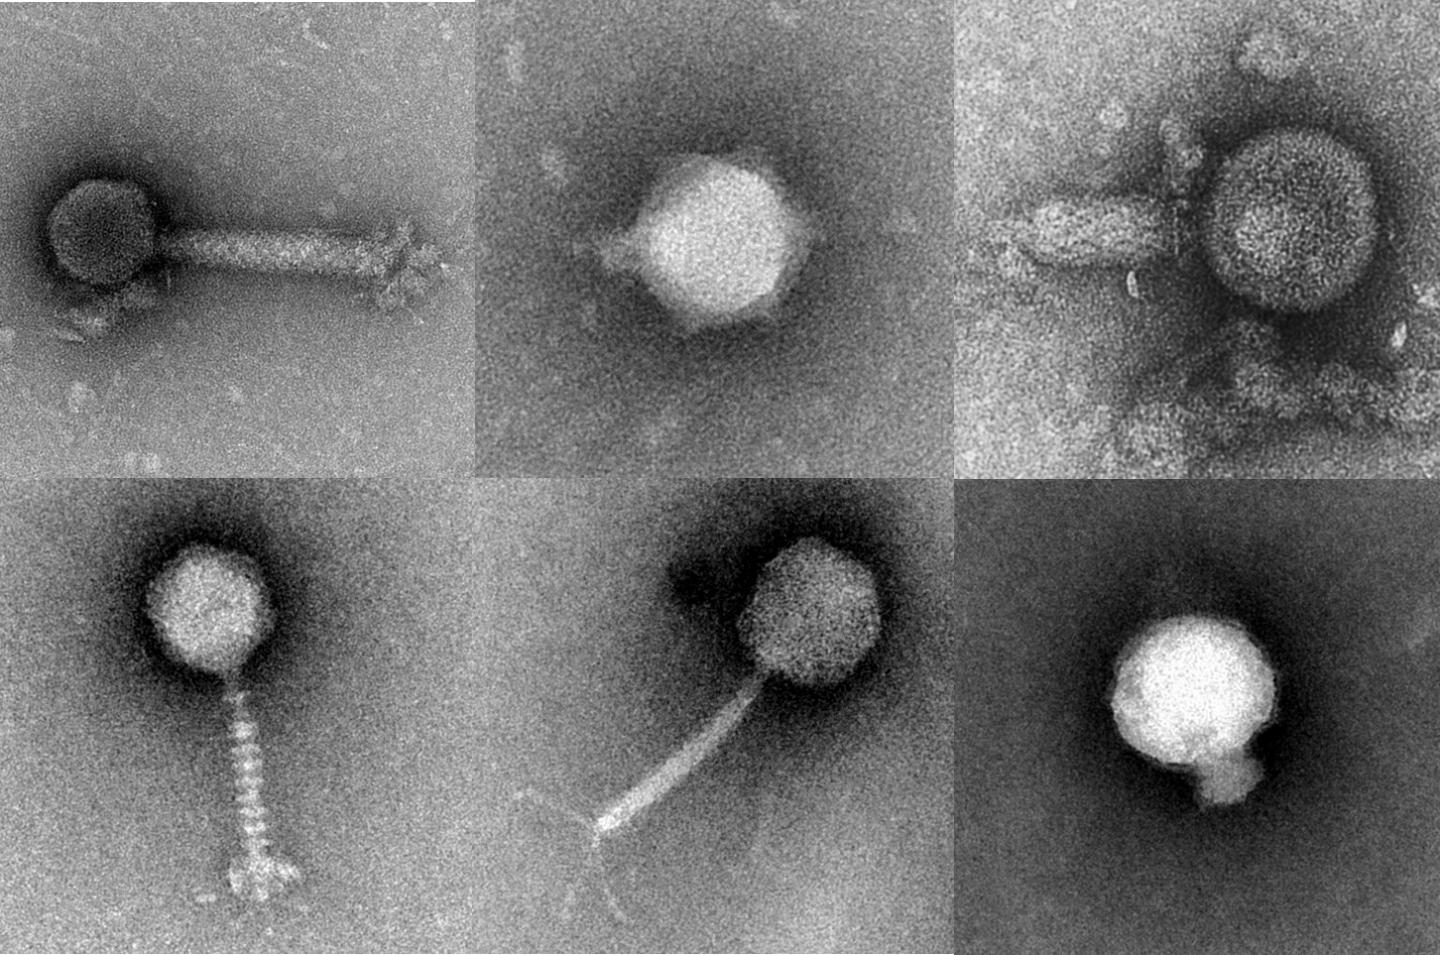 Virus Micrographs